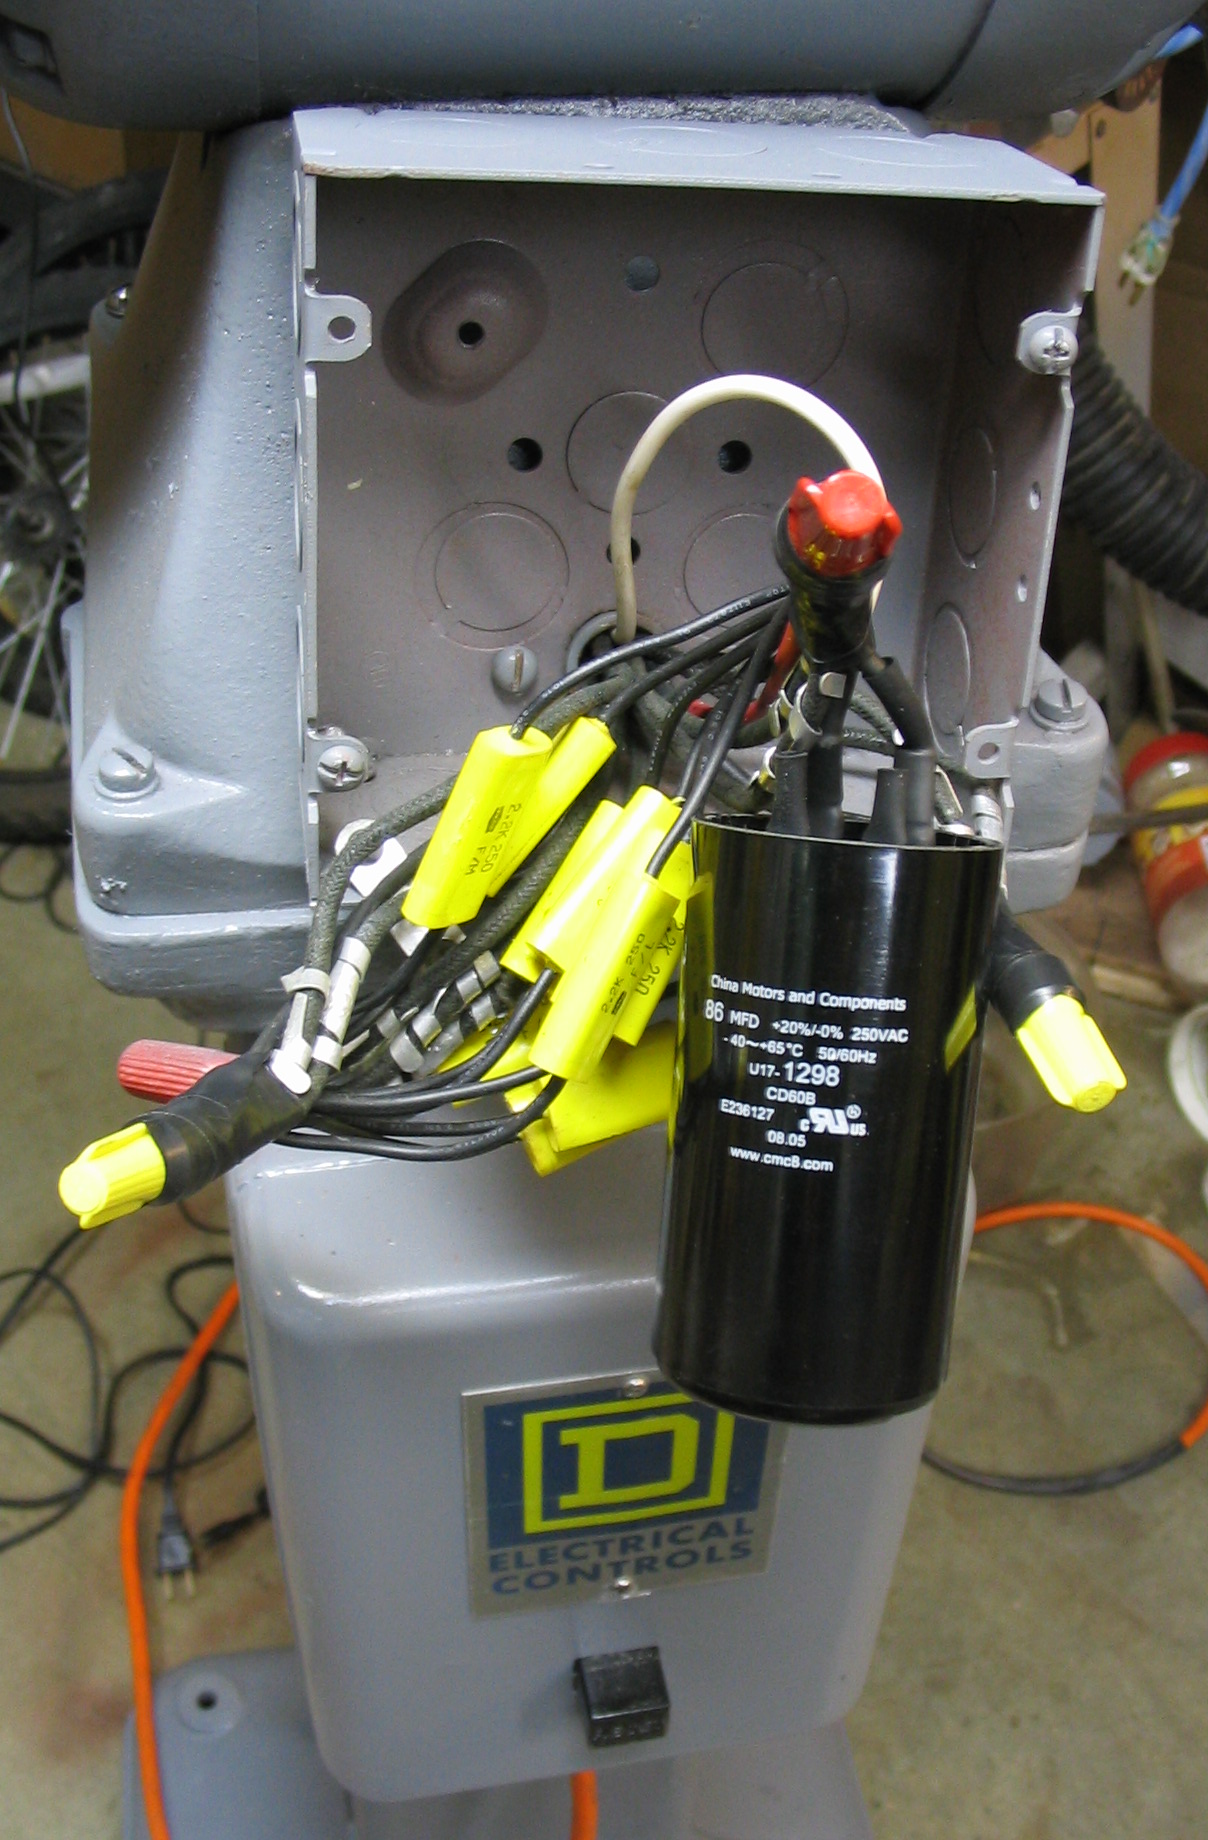 Final start capacitor